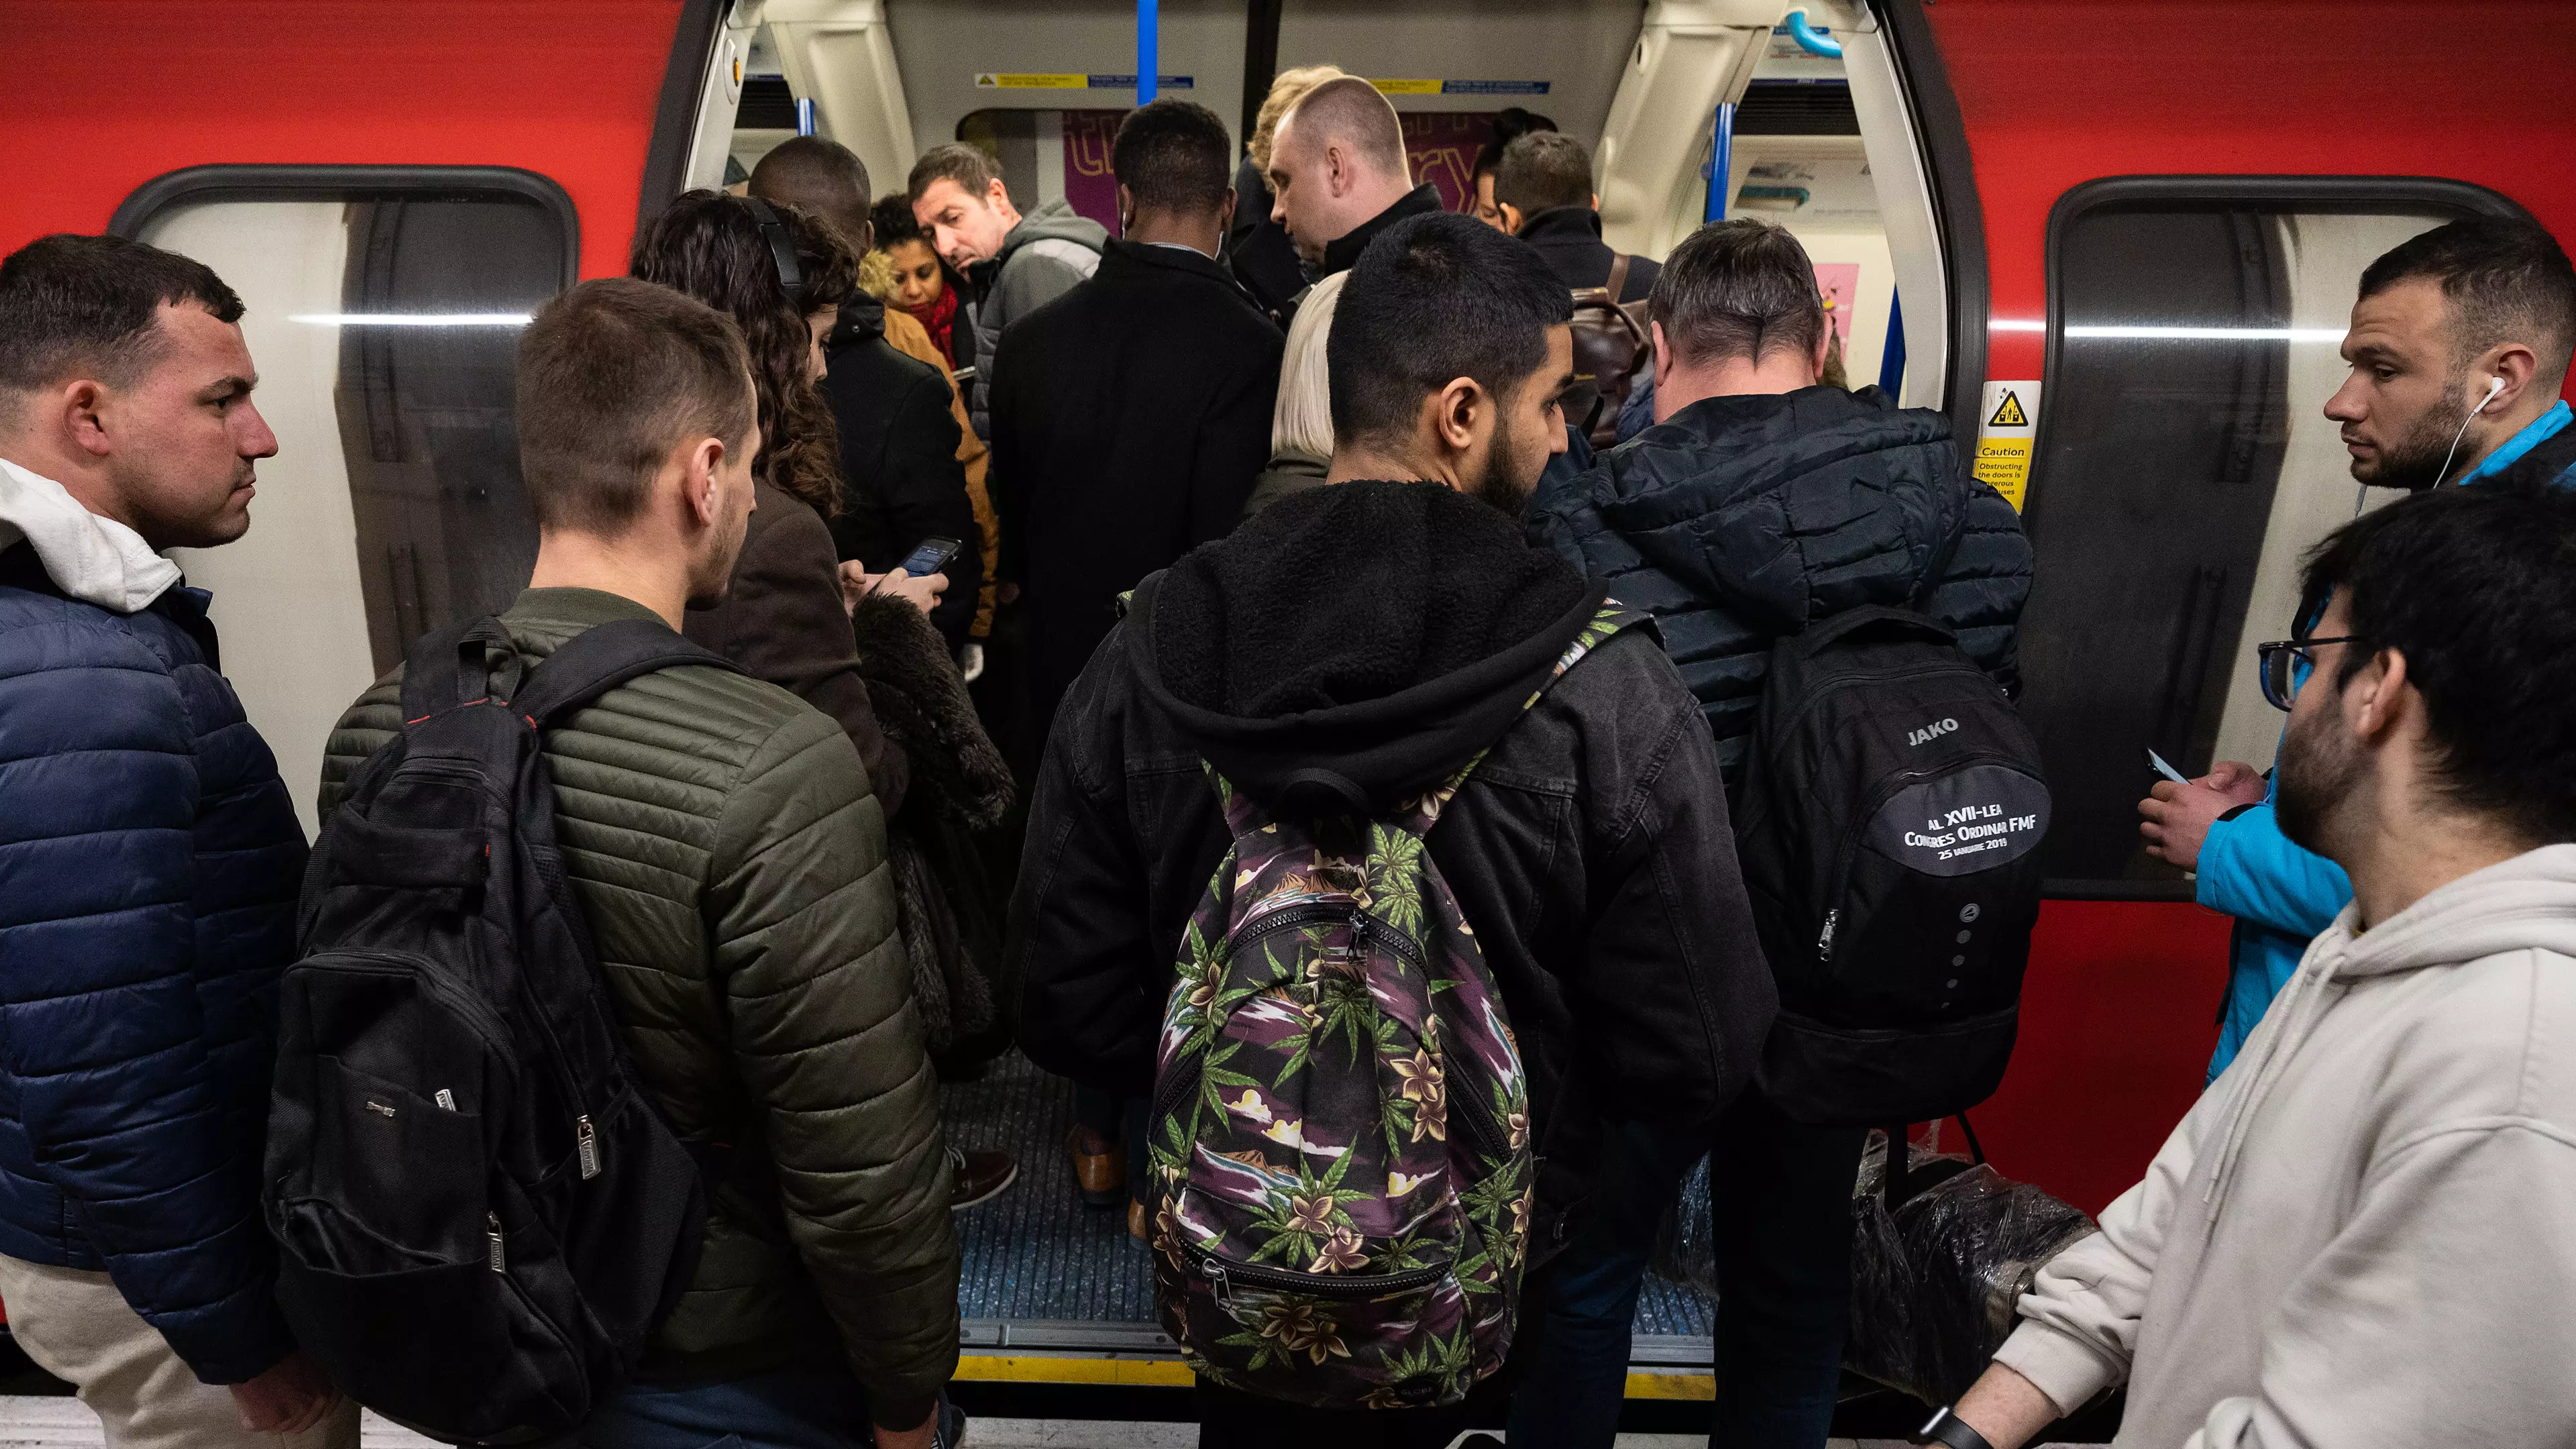 Commuters Cram Together On Tubes And Trains Despite Coronavirus Warnings